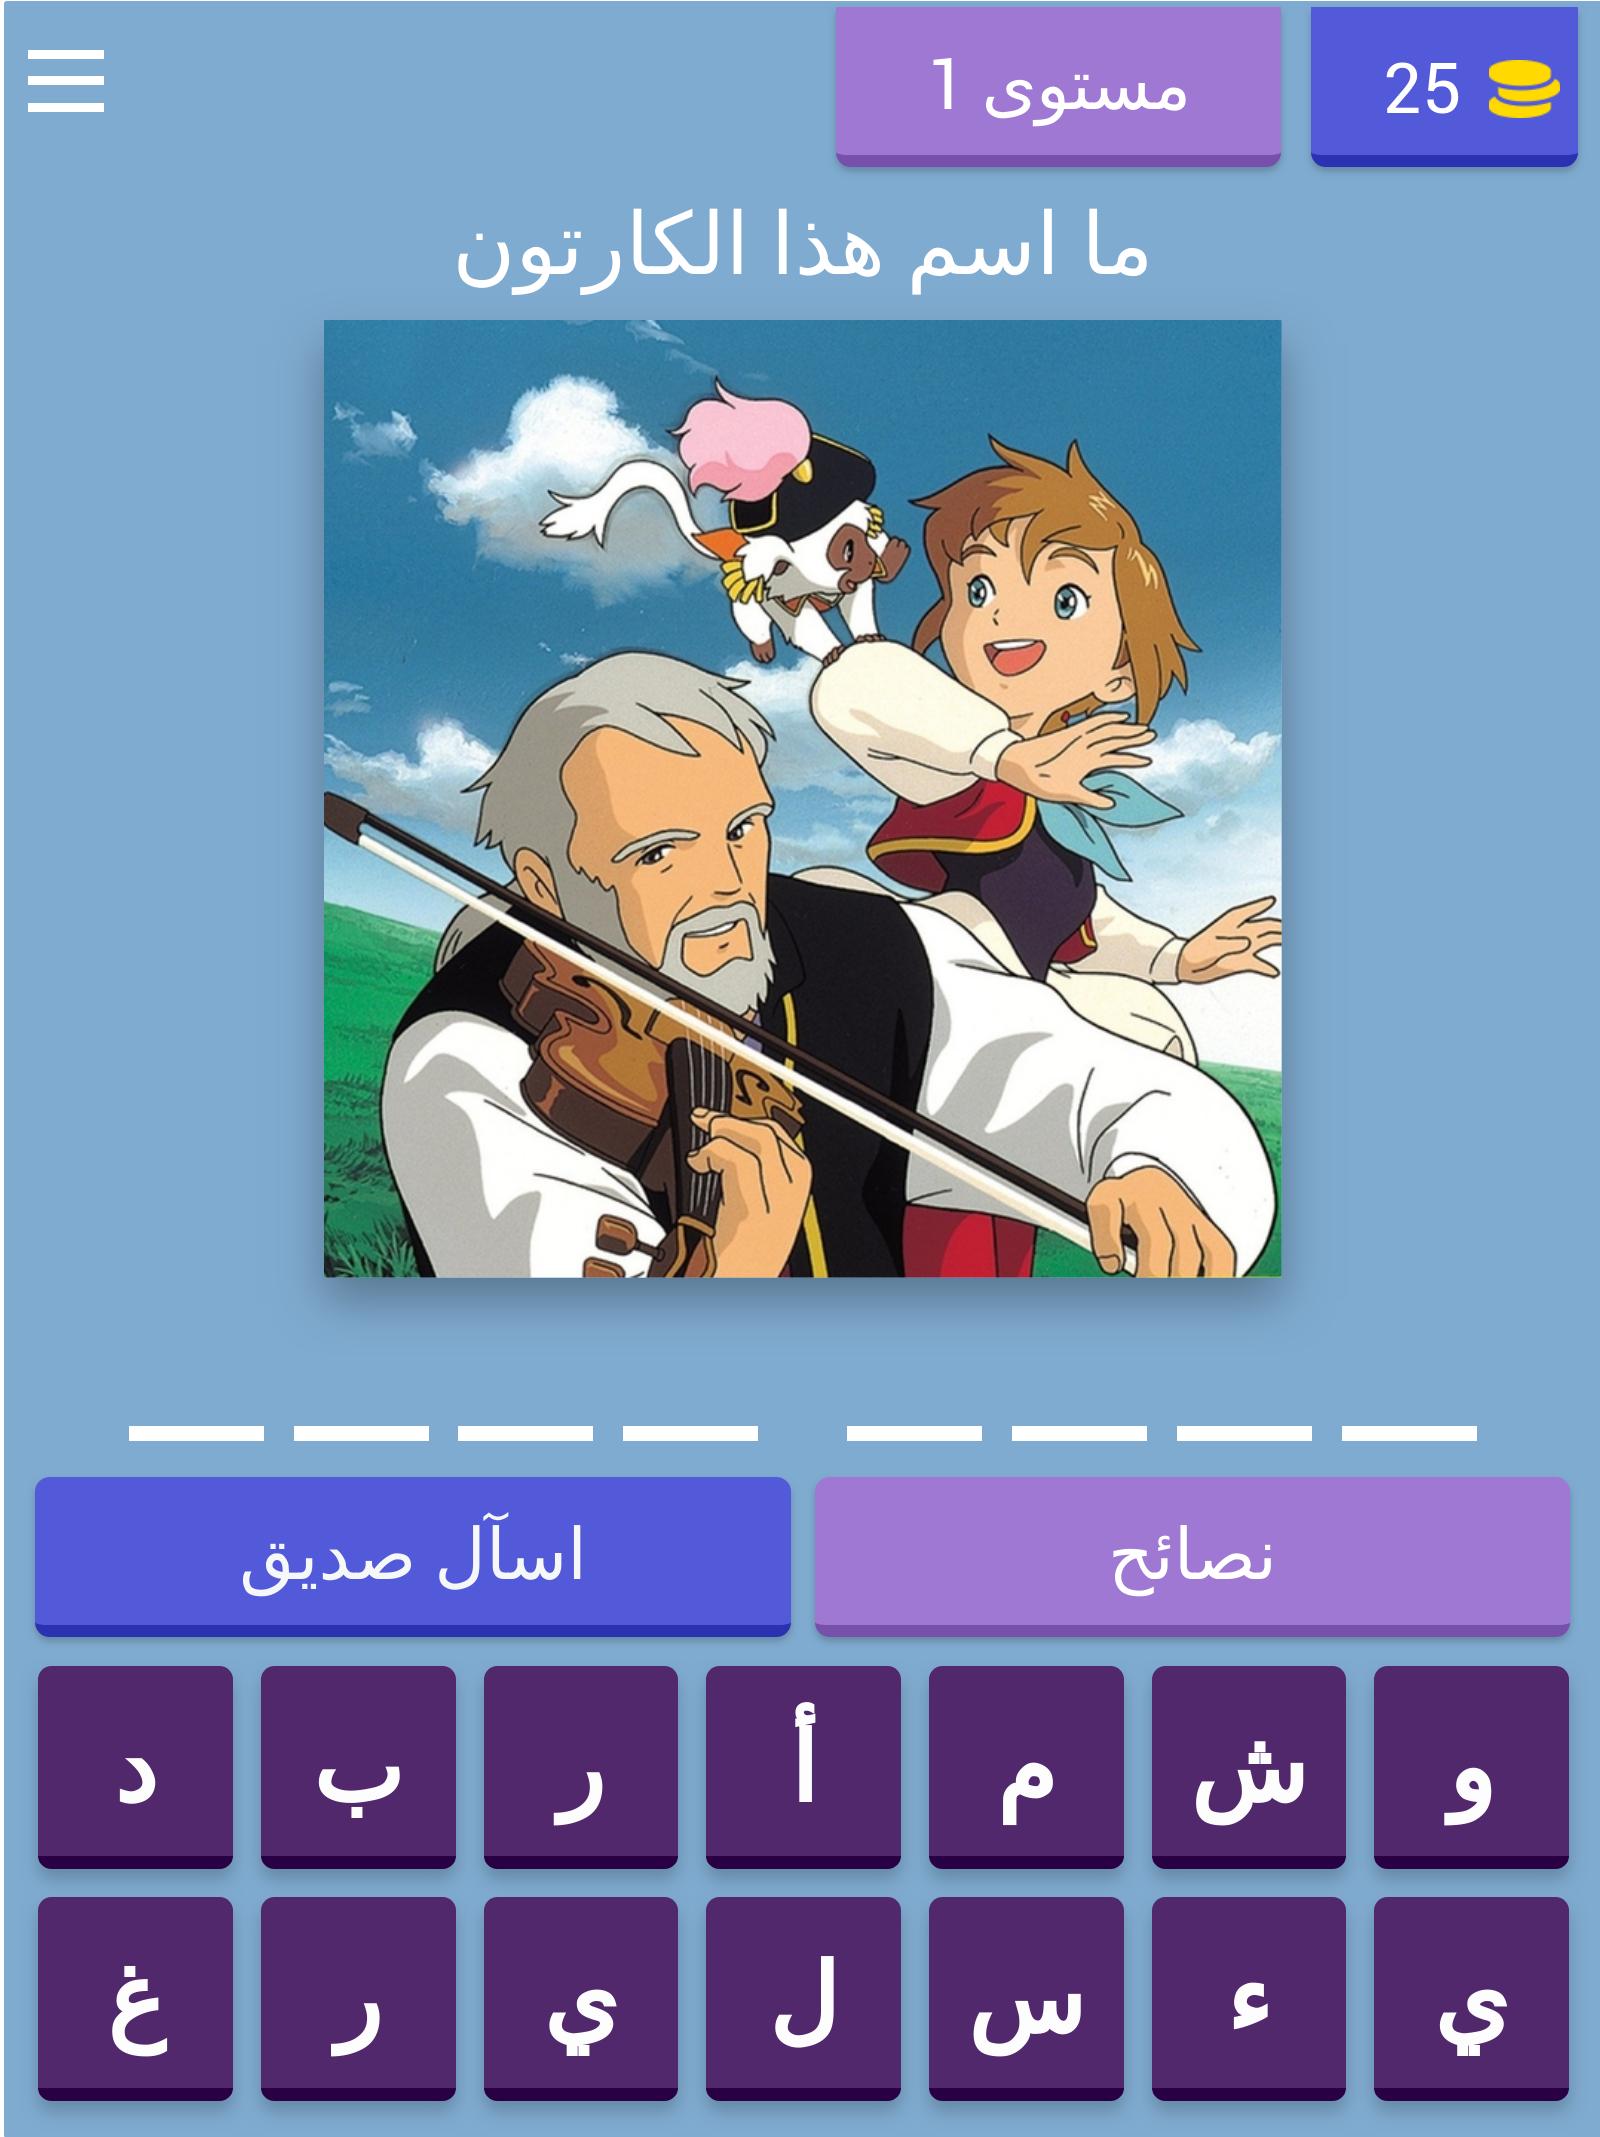 QUIZLOGO - Arabic Toon 8.4.3z Screenshot 8